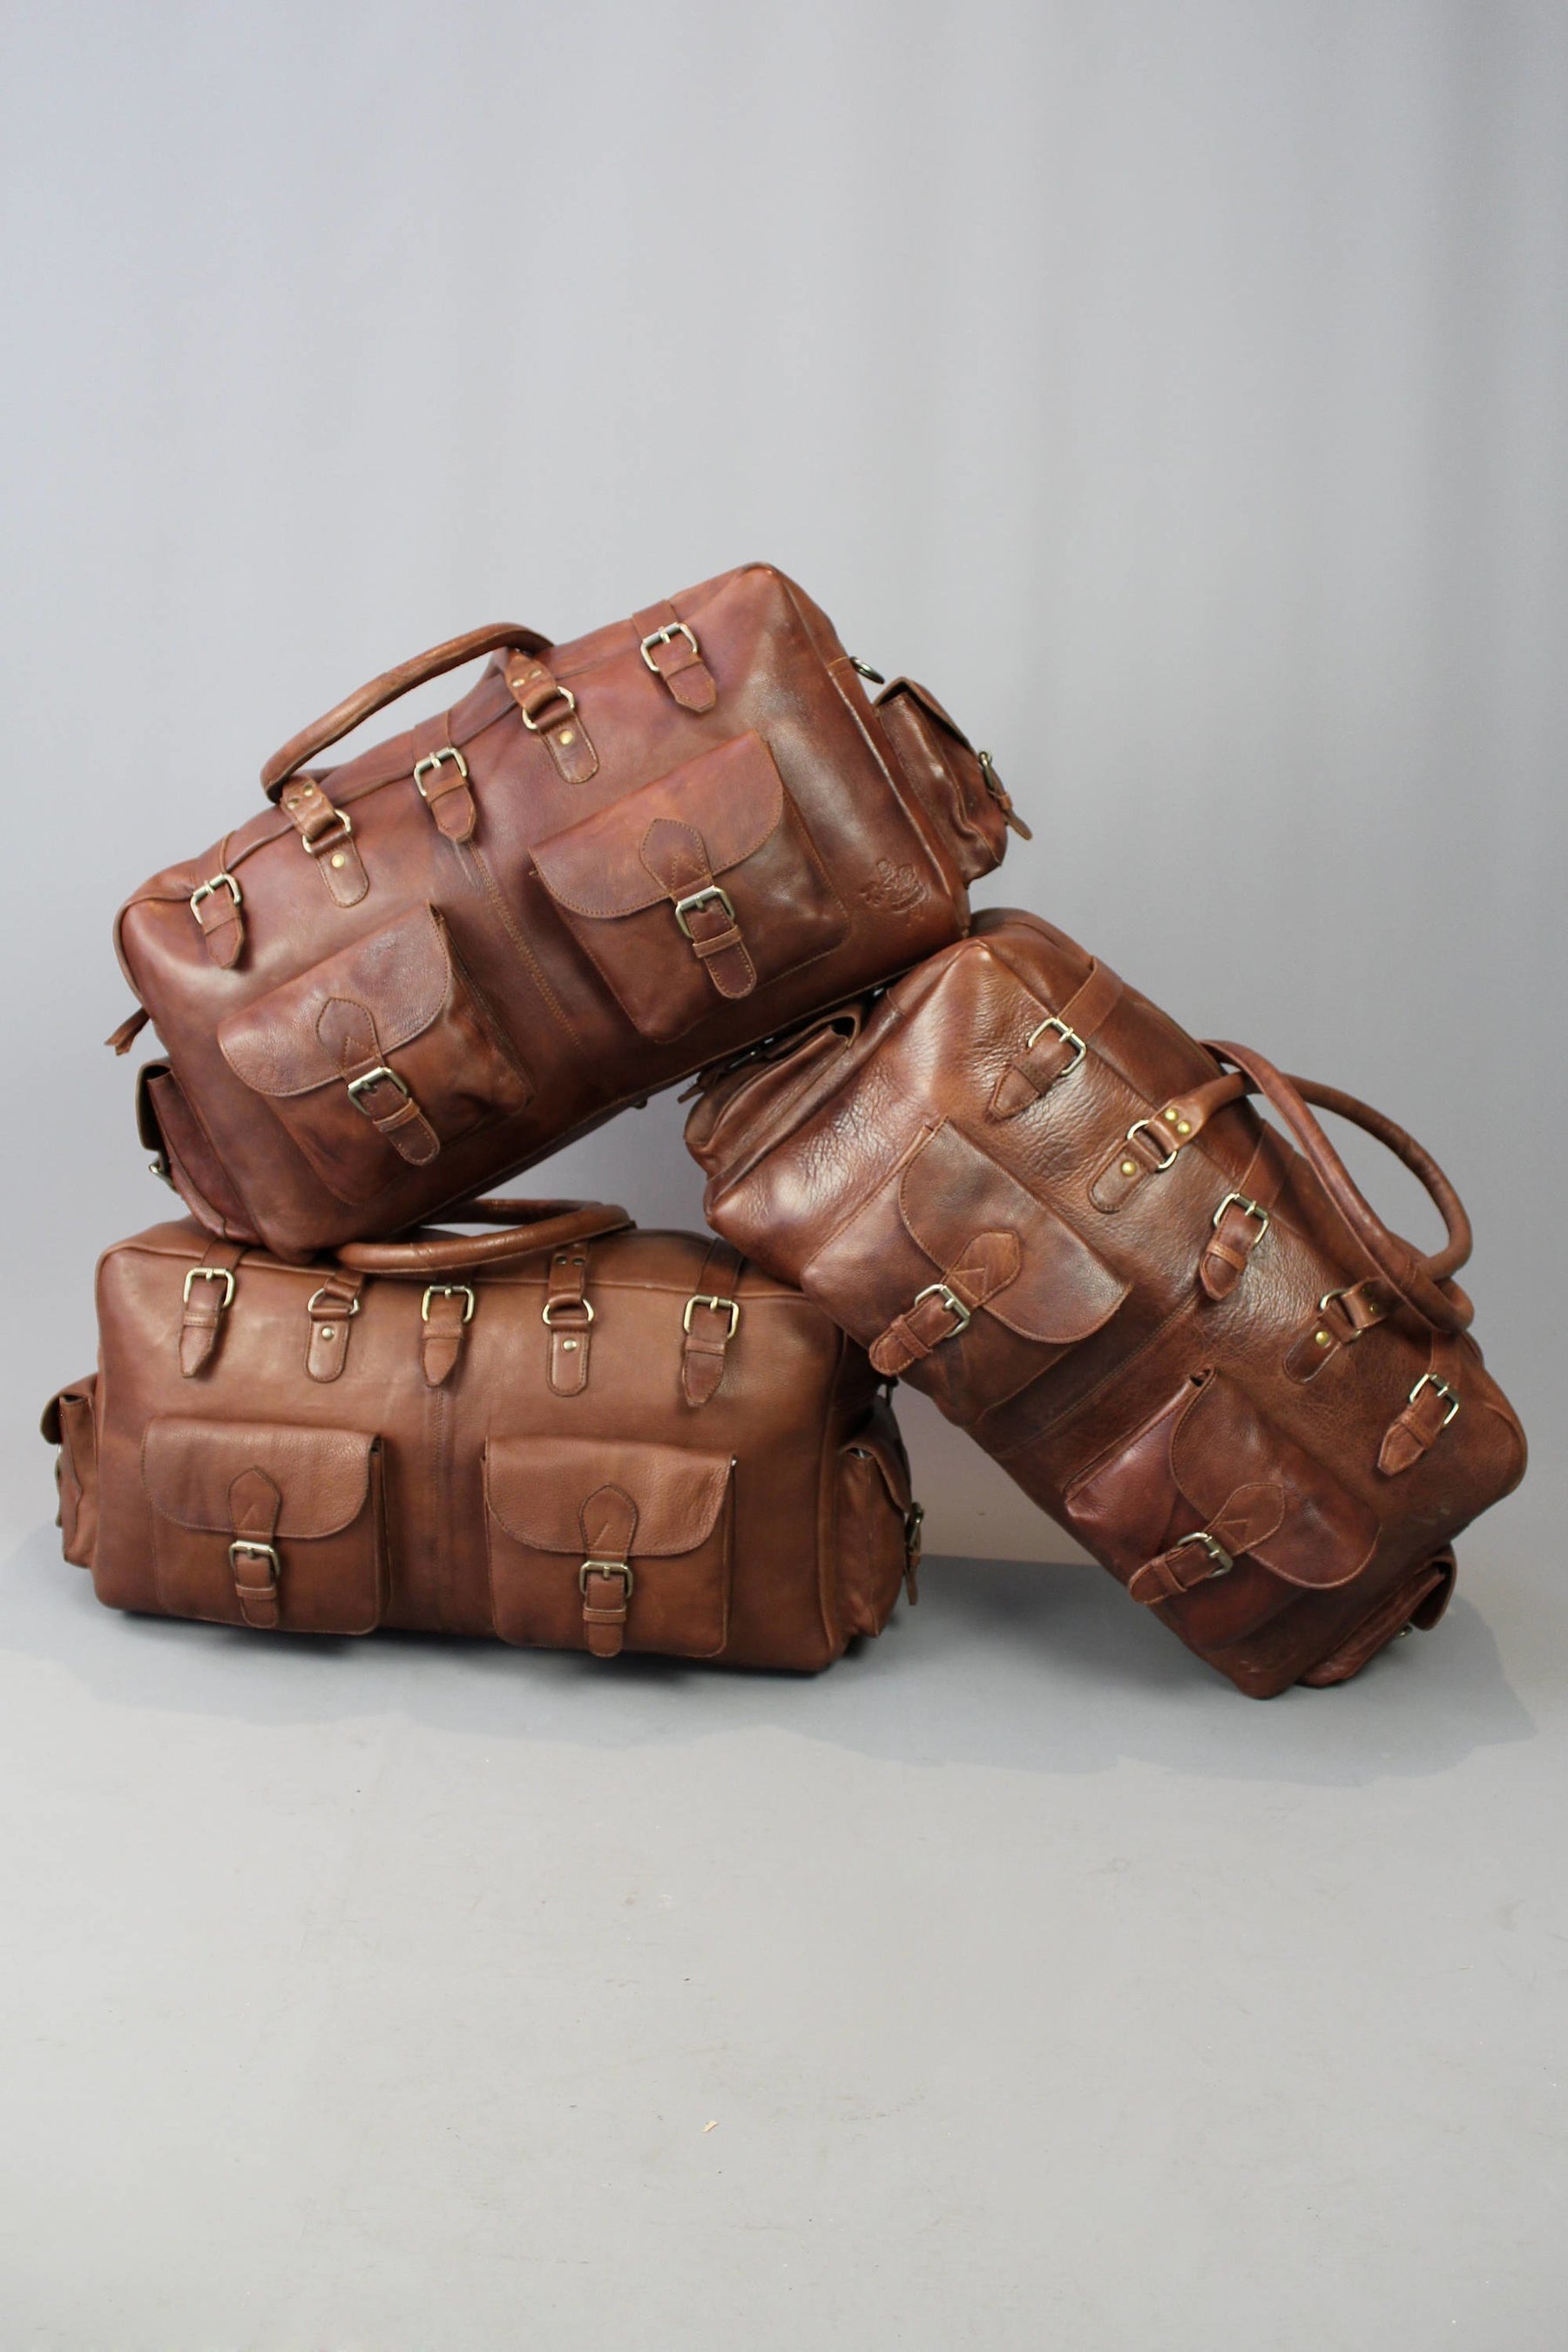 Master Mason Blue Lodge Travel Bag - Conker Brown Leather - Bricks Masons